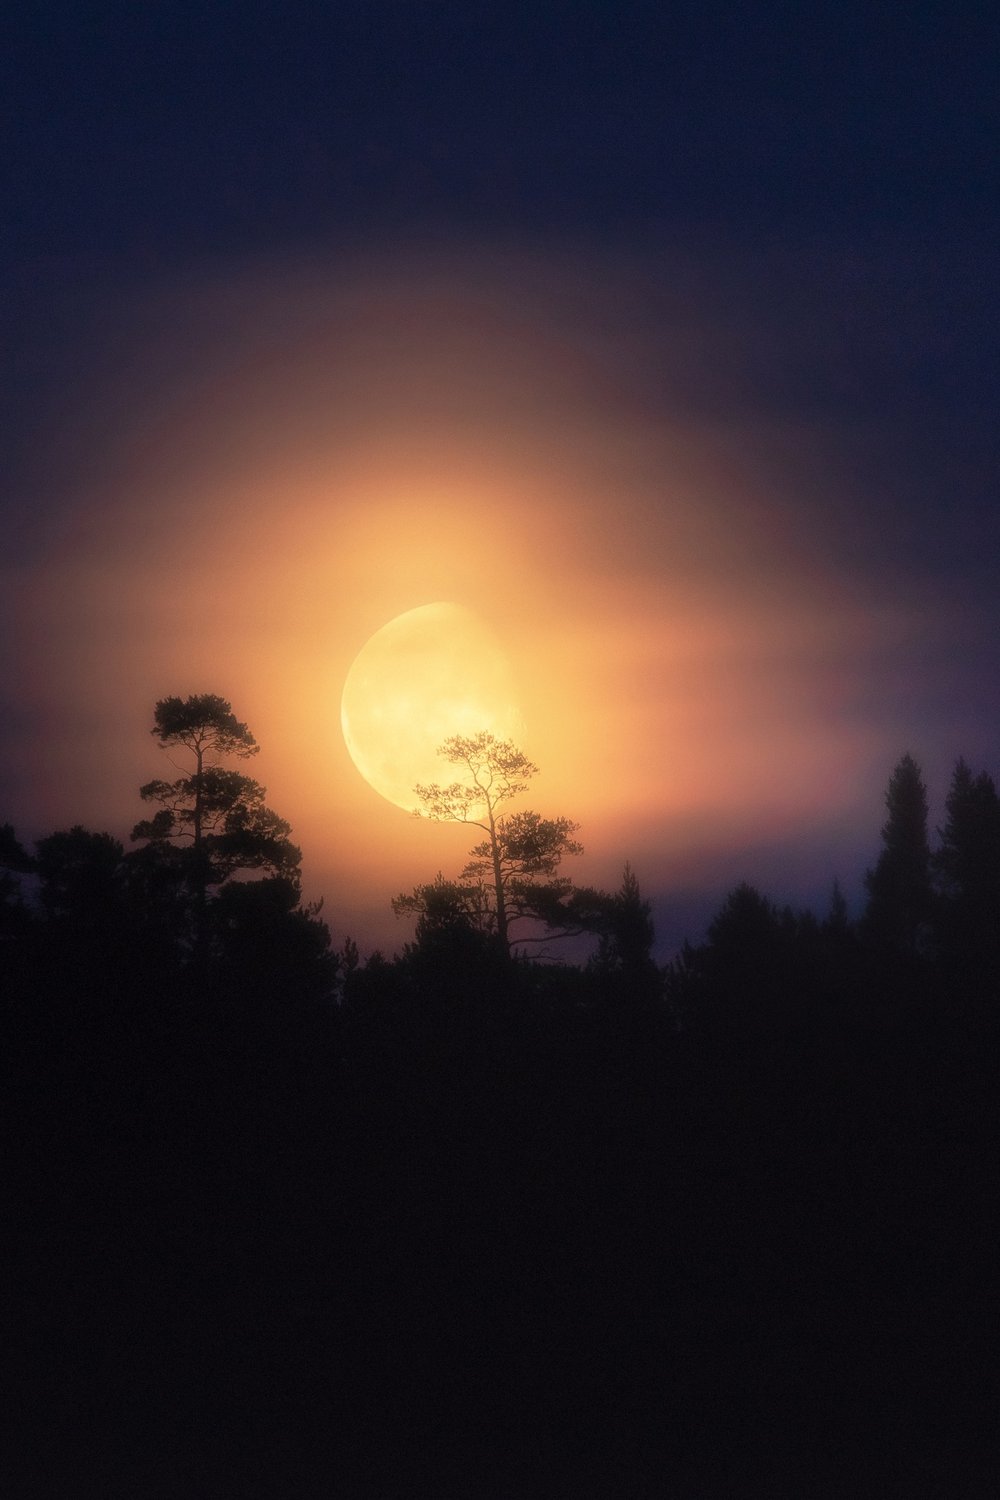 Луна над ладожскими лесами